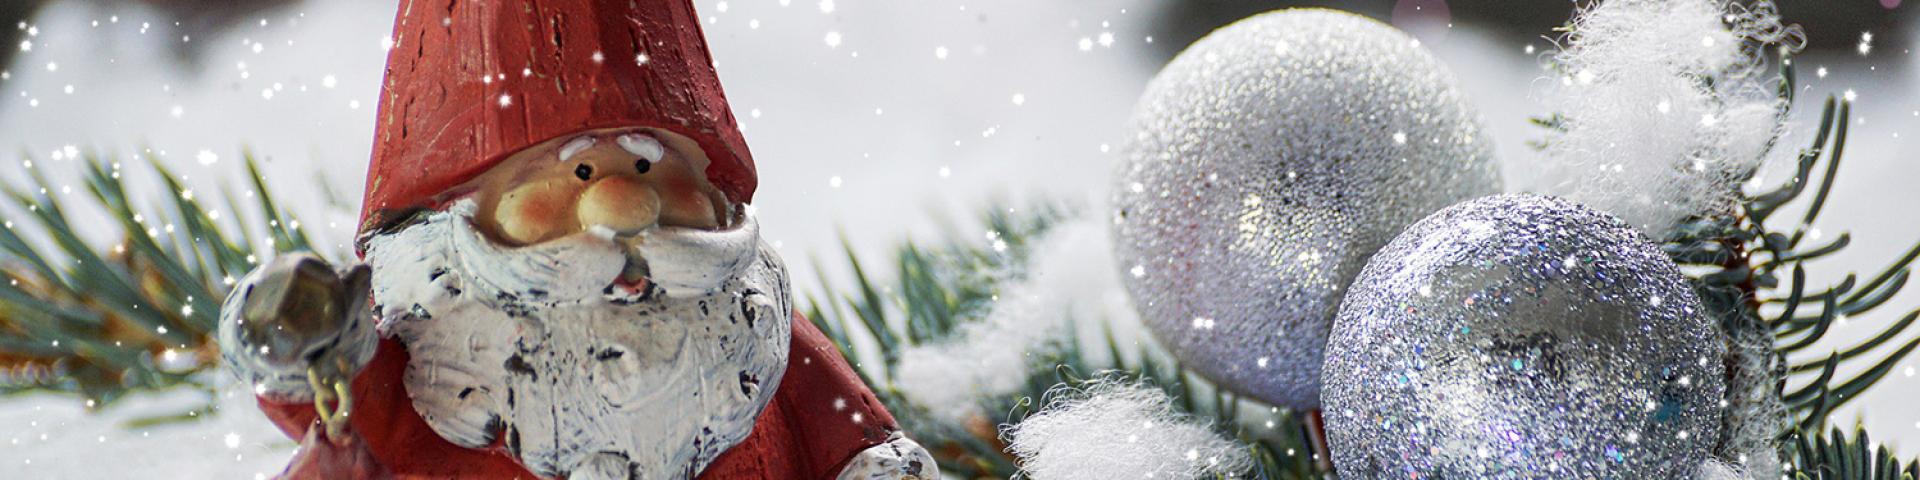 1500-christmas-santa-2898306-pixabay.jpg